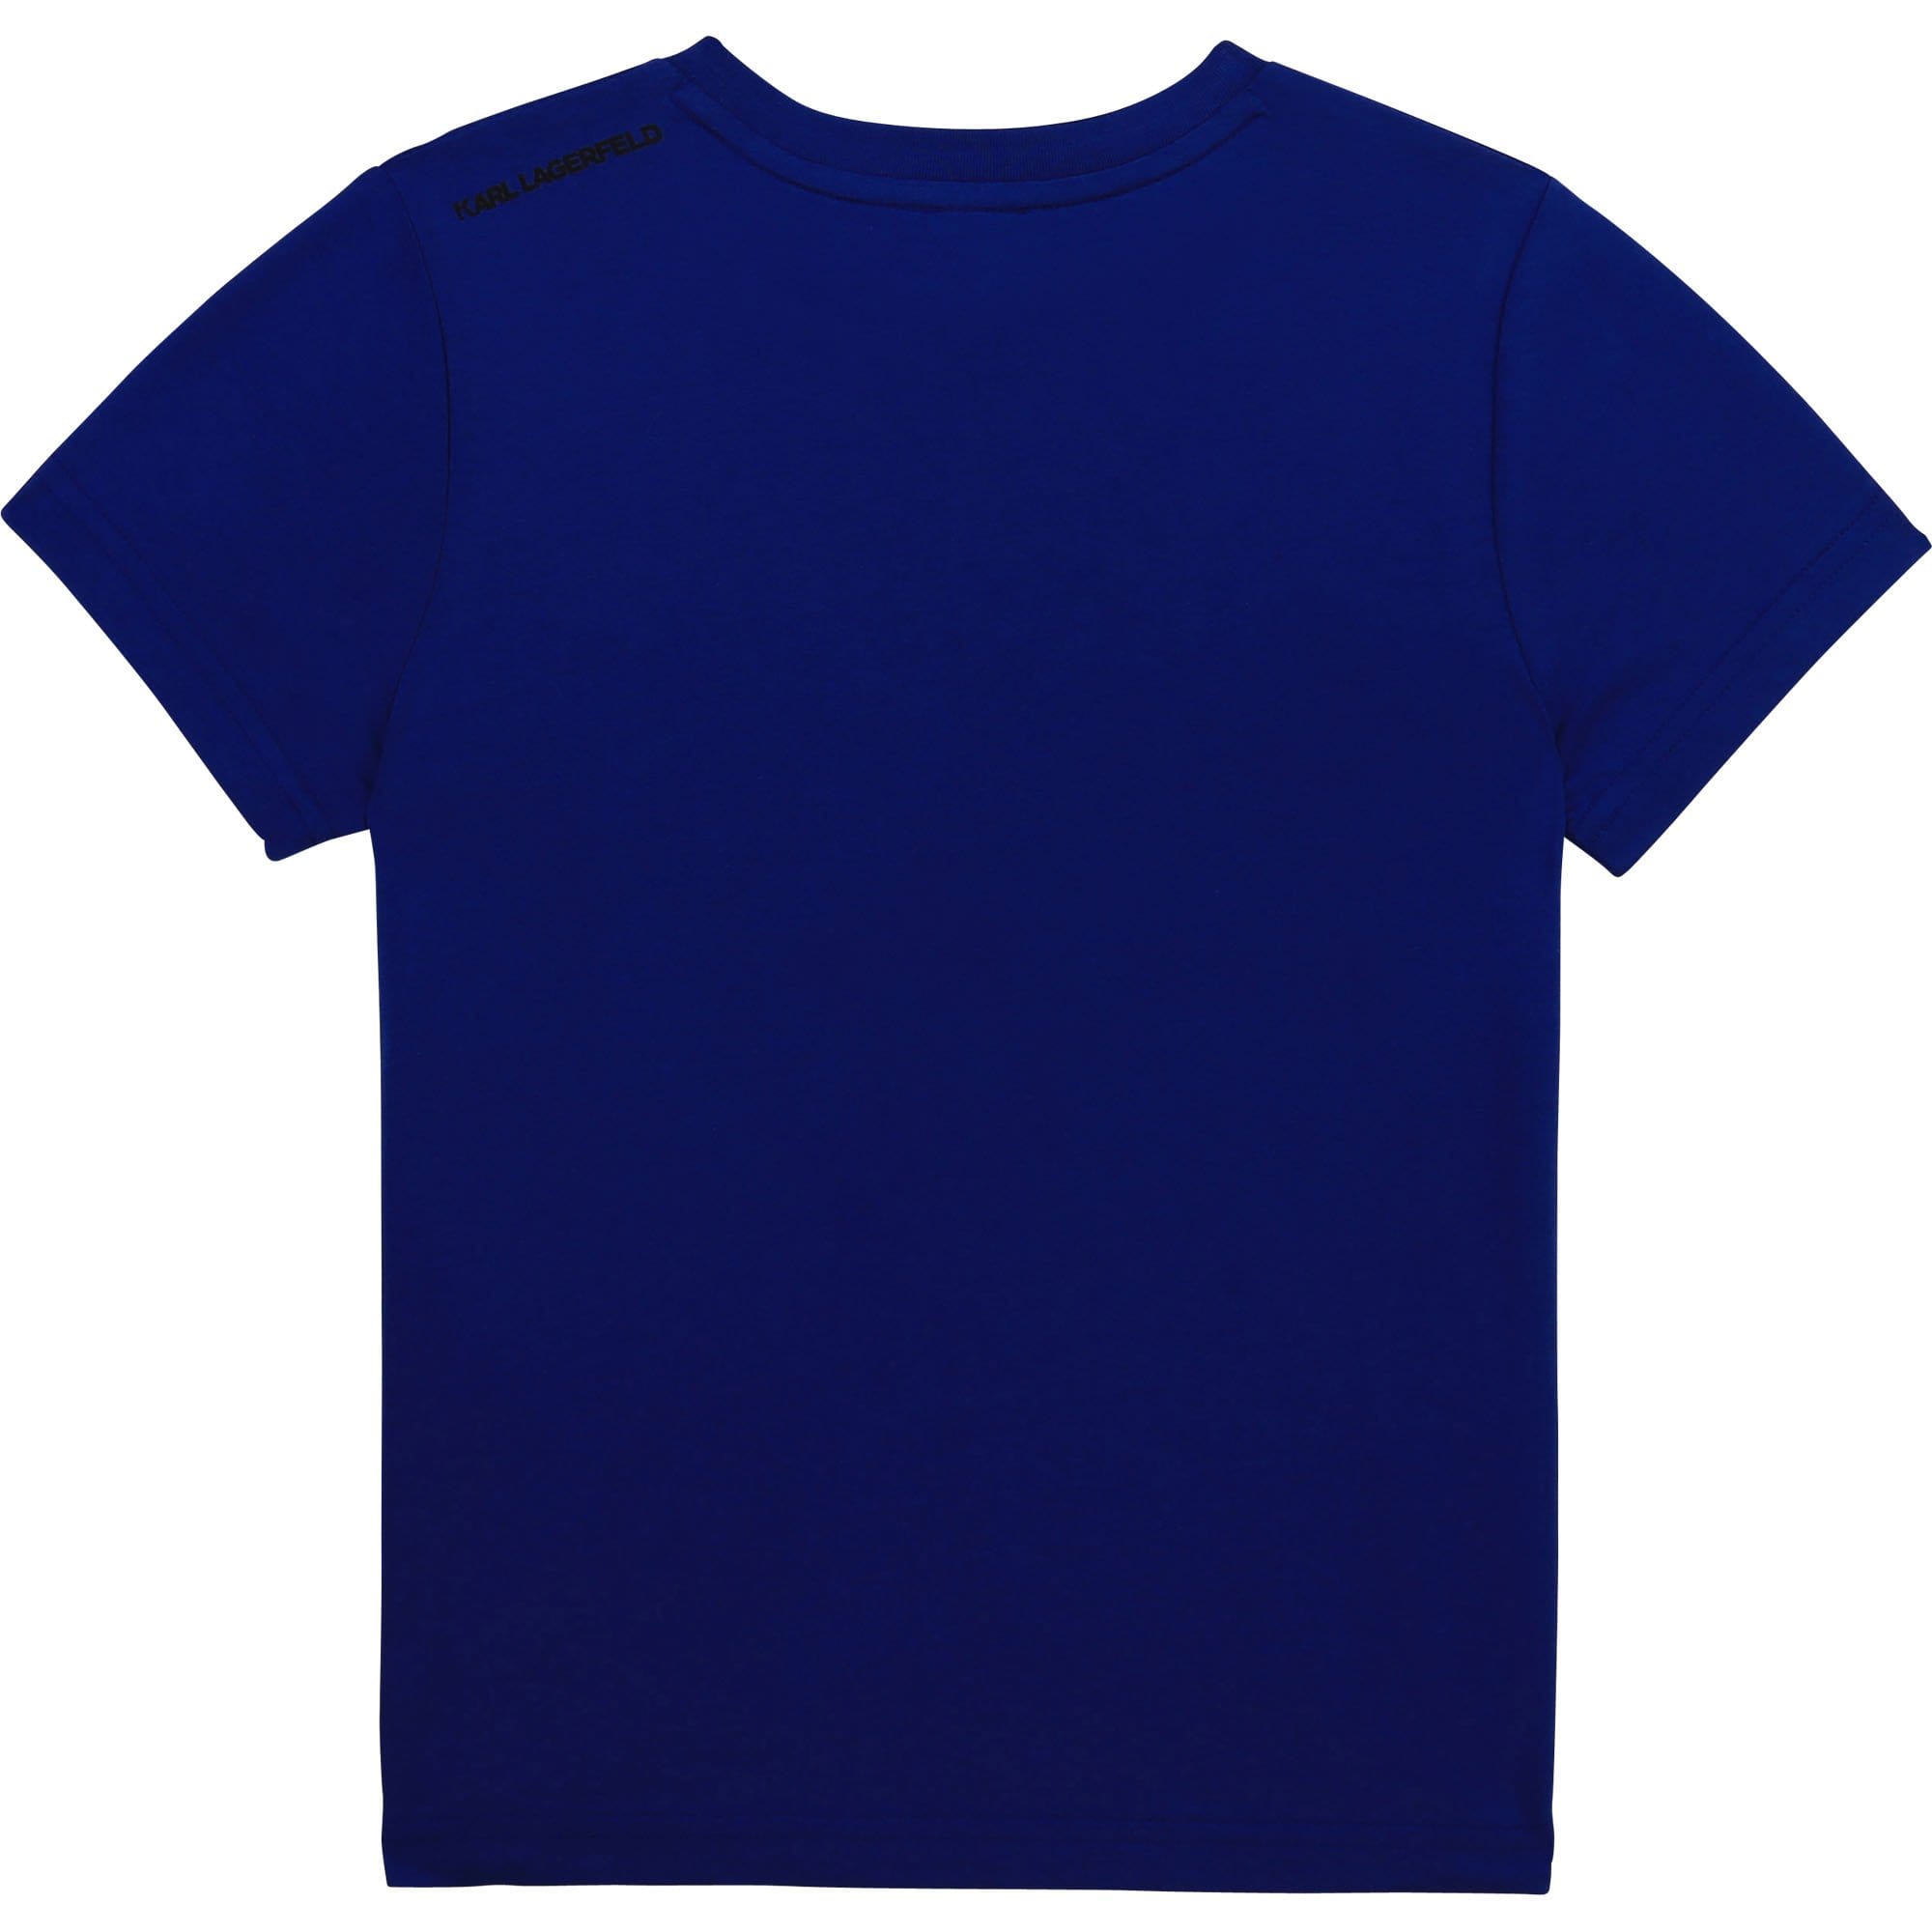 Karl Lagerfeld - Karl & Bad Cat Print T Shirt - Electric blue